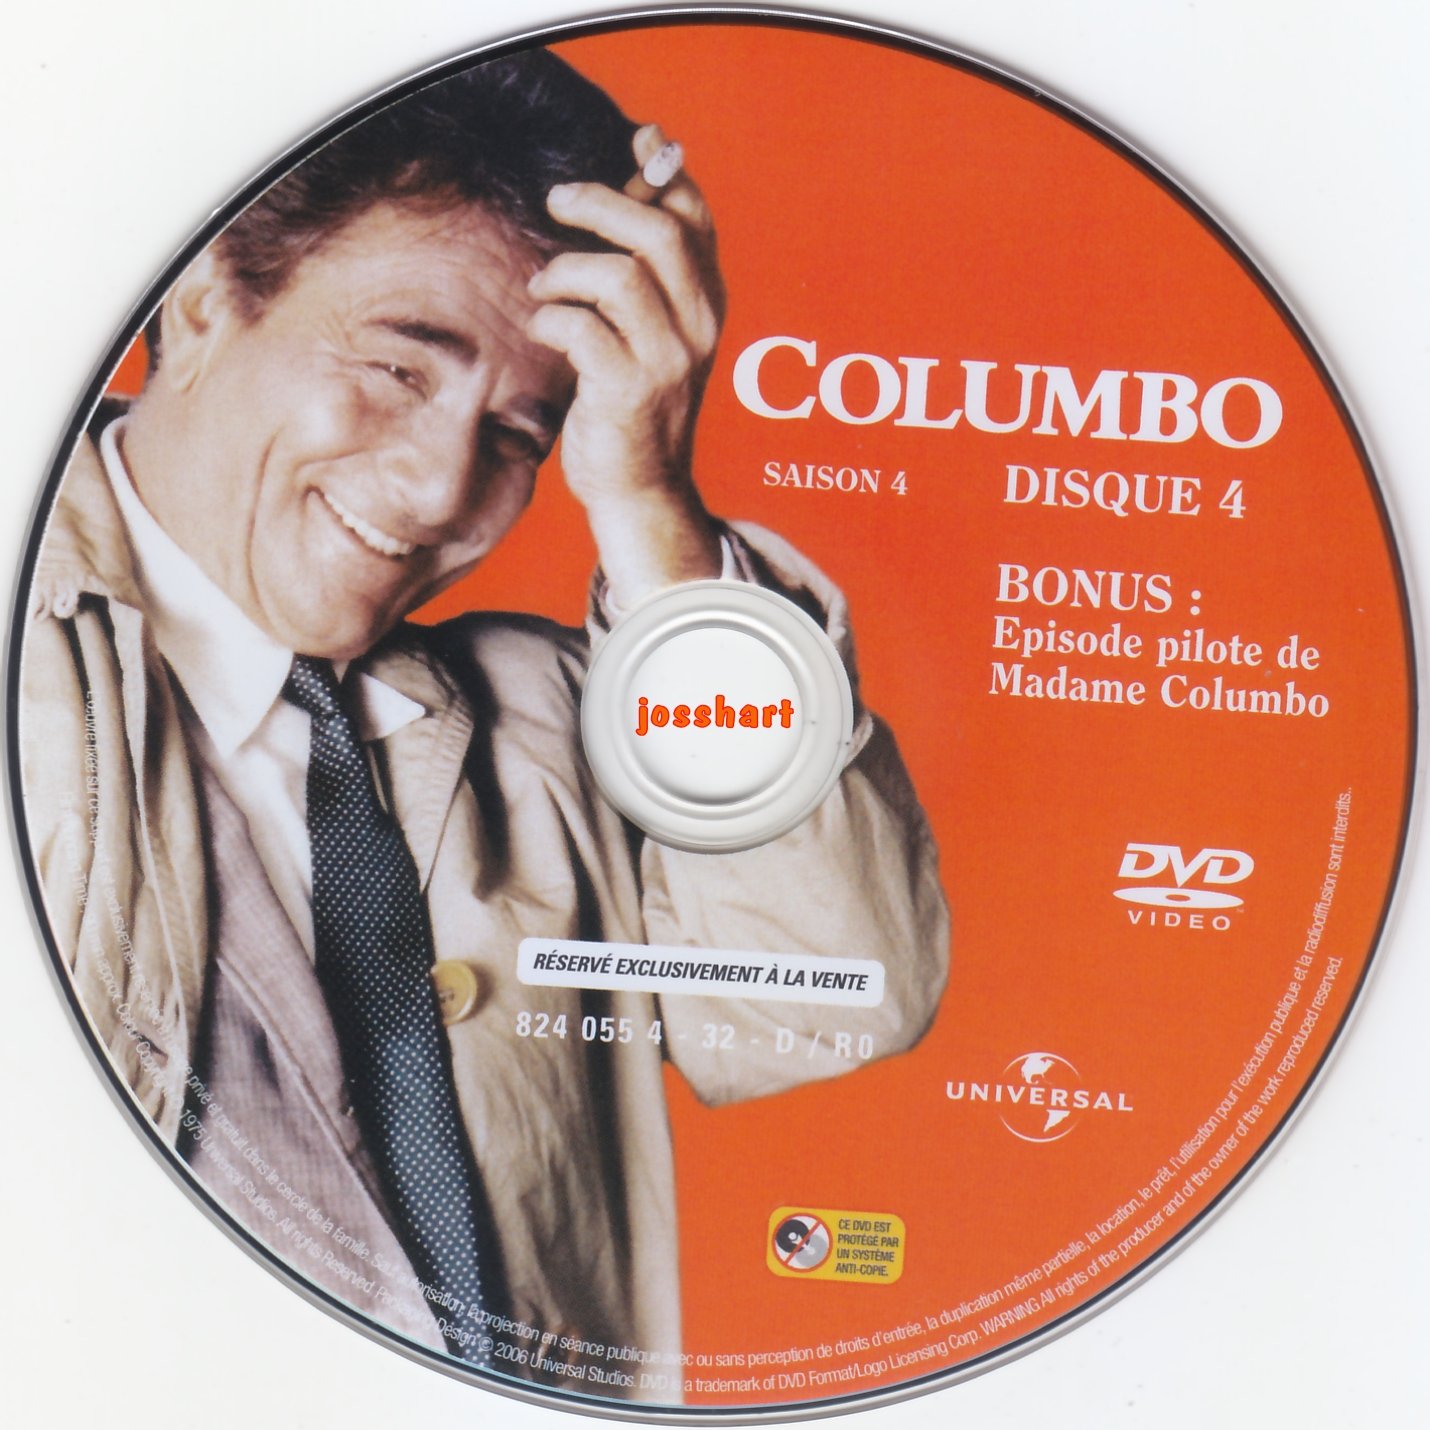 Columbo S4 DISC4